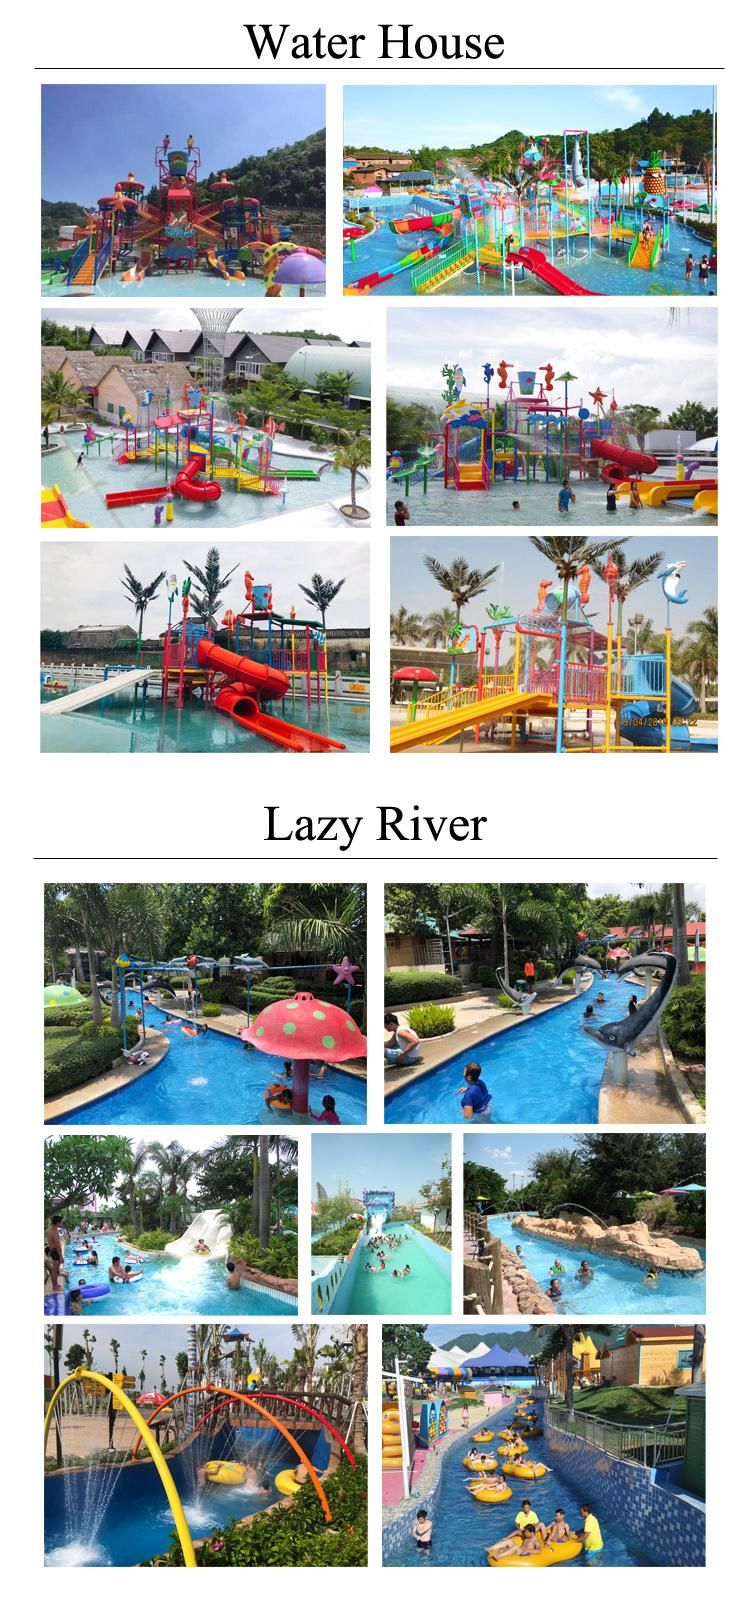 Multi-Bump Slide Water Amusement Park Equipment